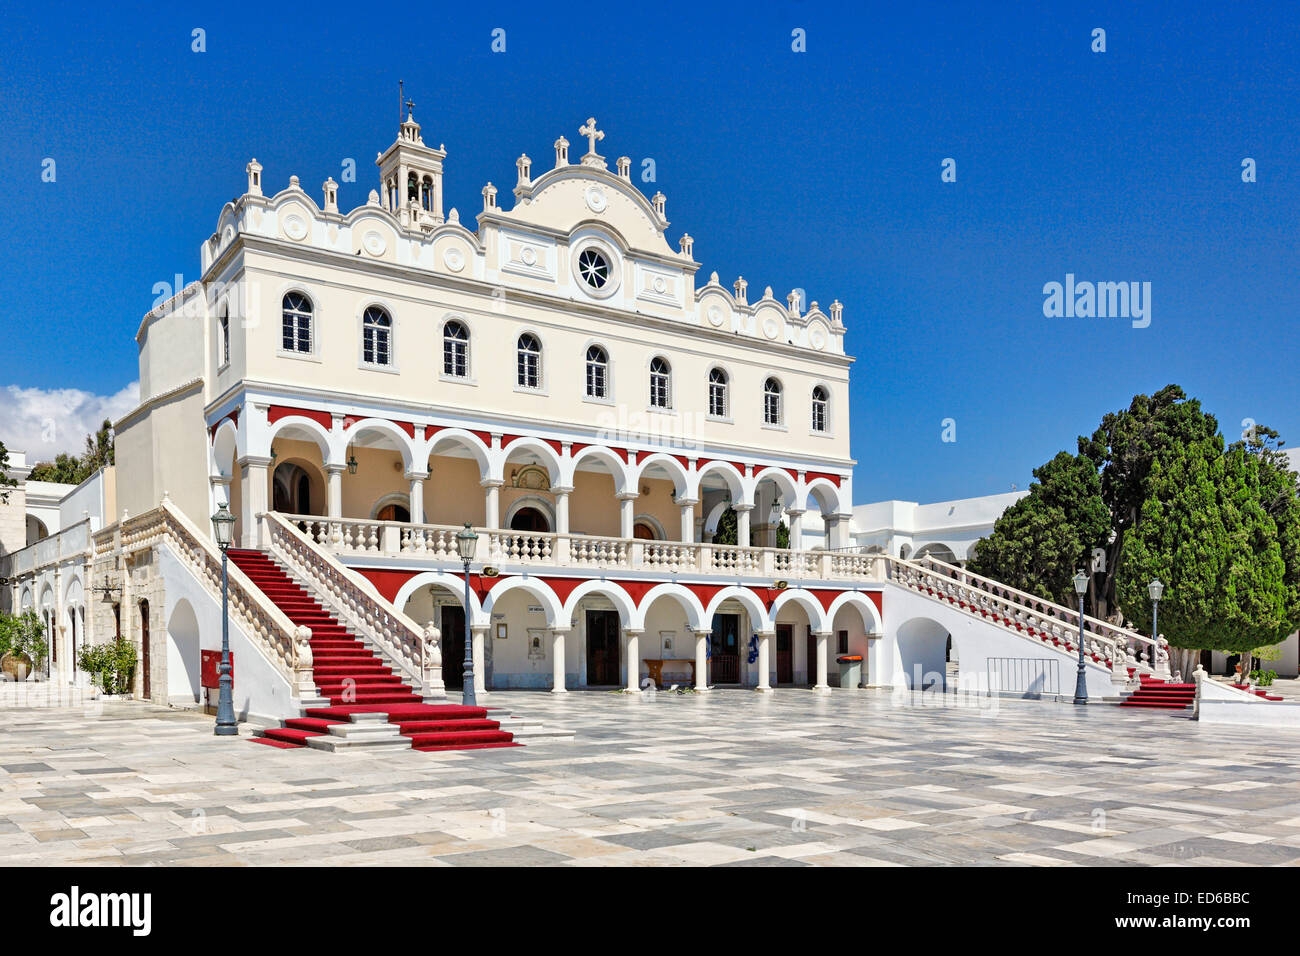 The famous monastery of miraculous Evagelistria in Tinos island, Greece Stock Photo